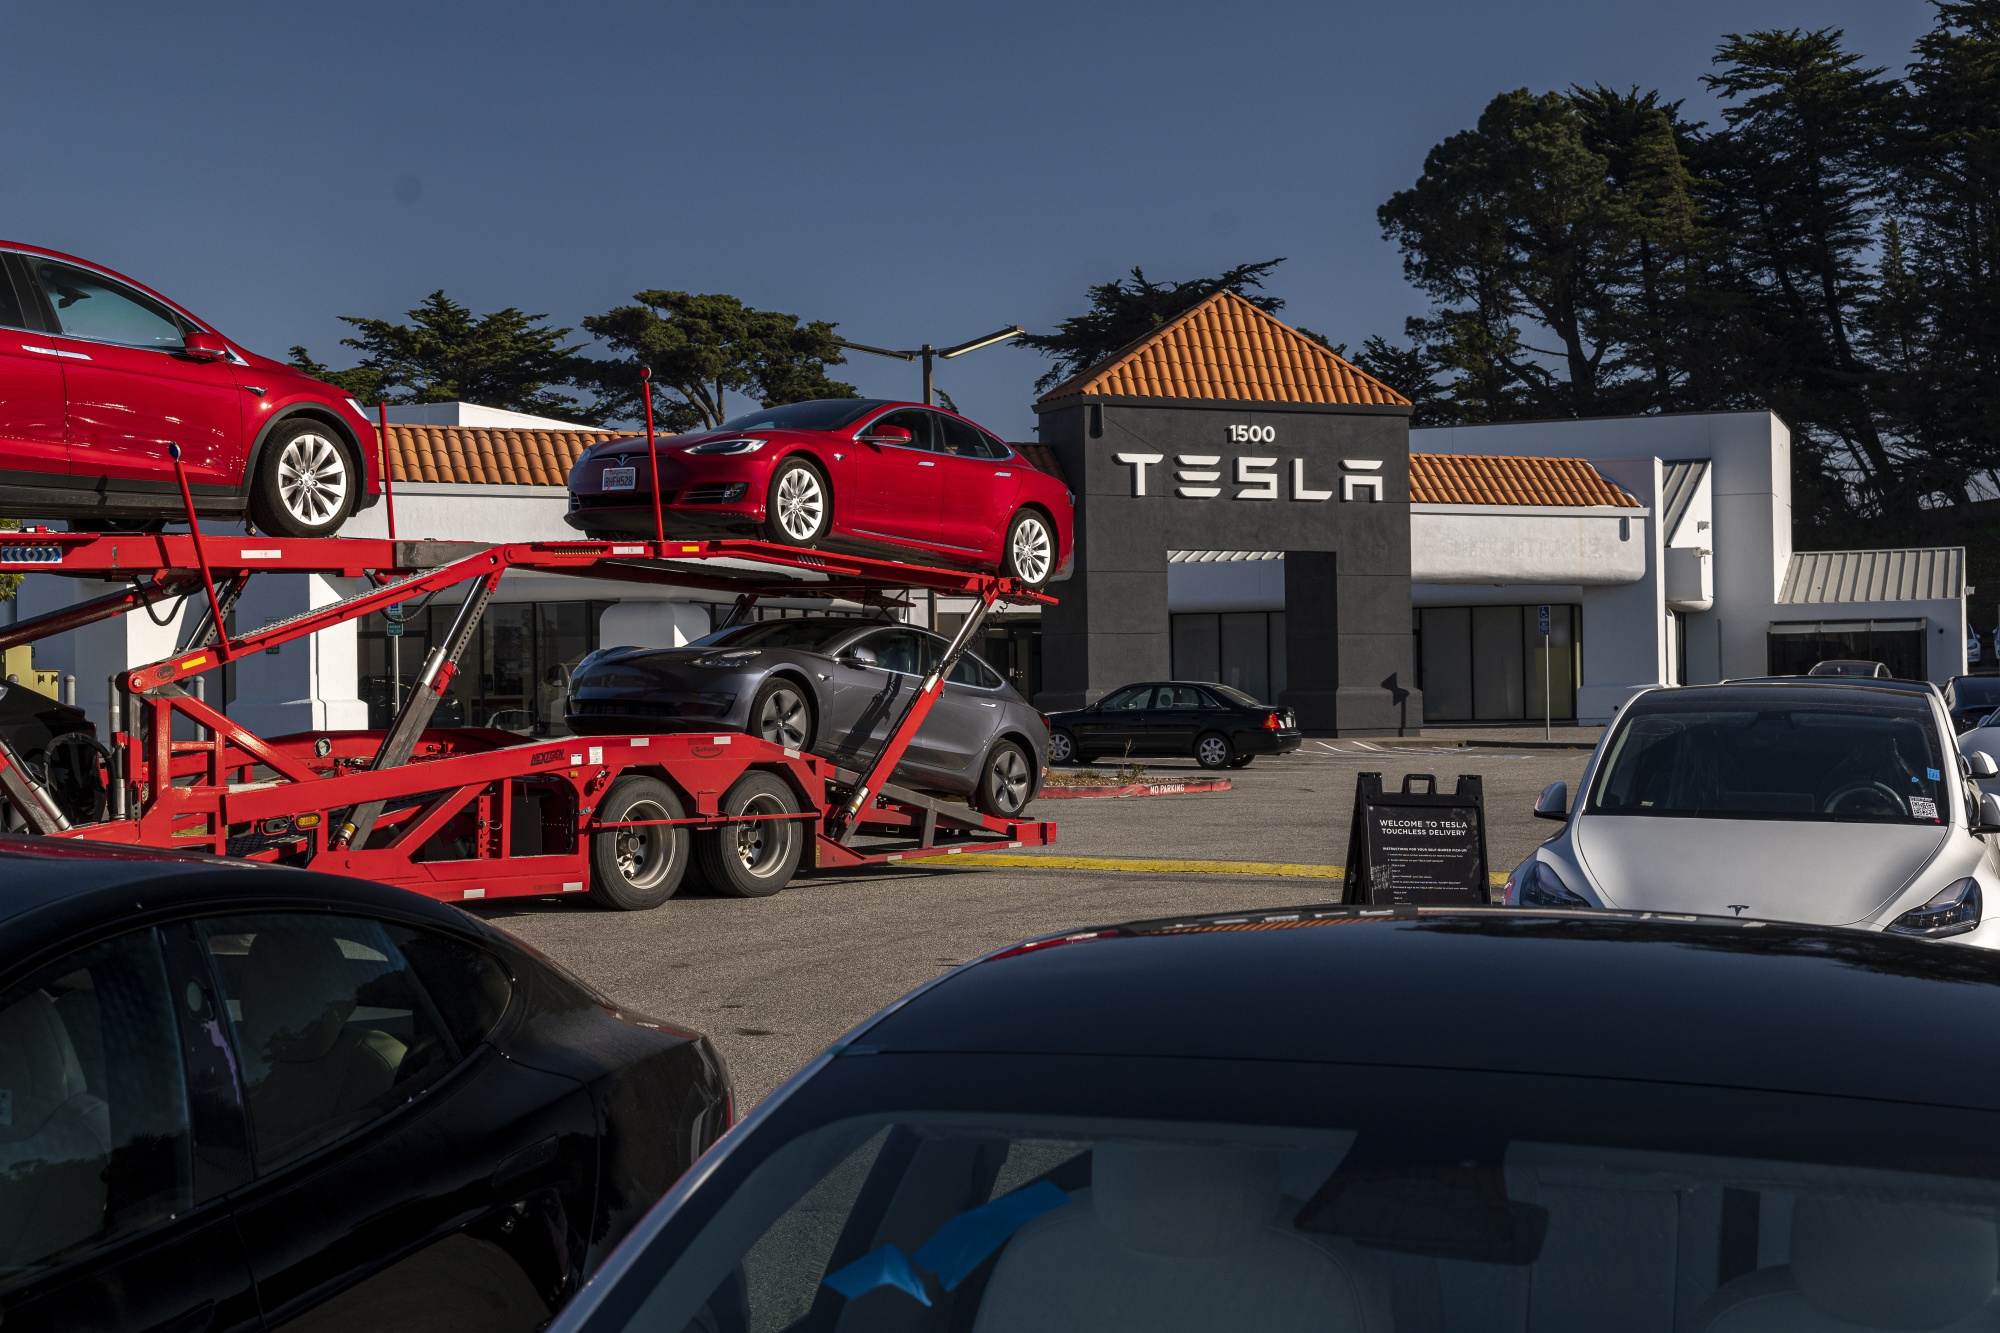 A Tesla dealership in Colma, California.